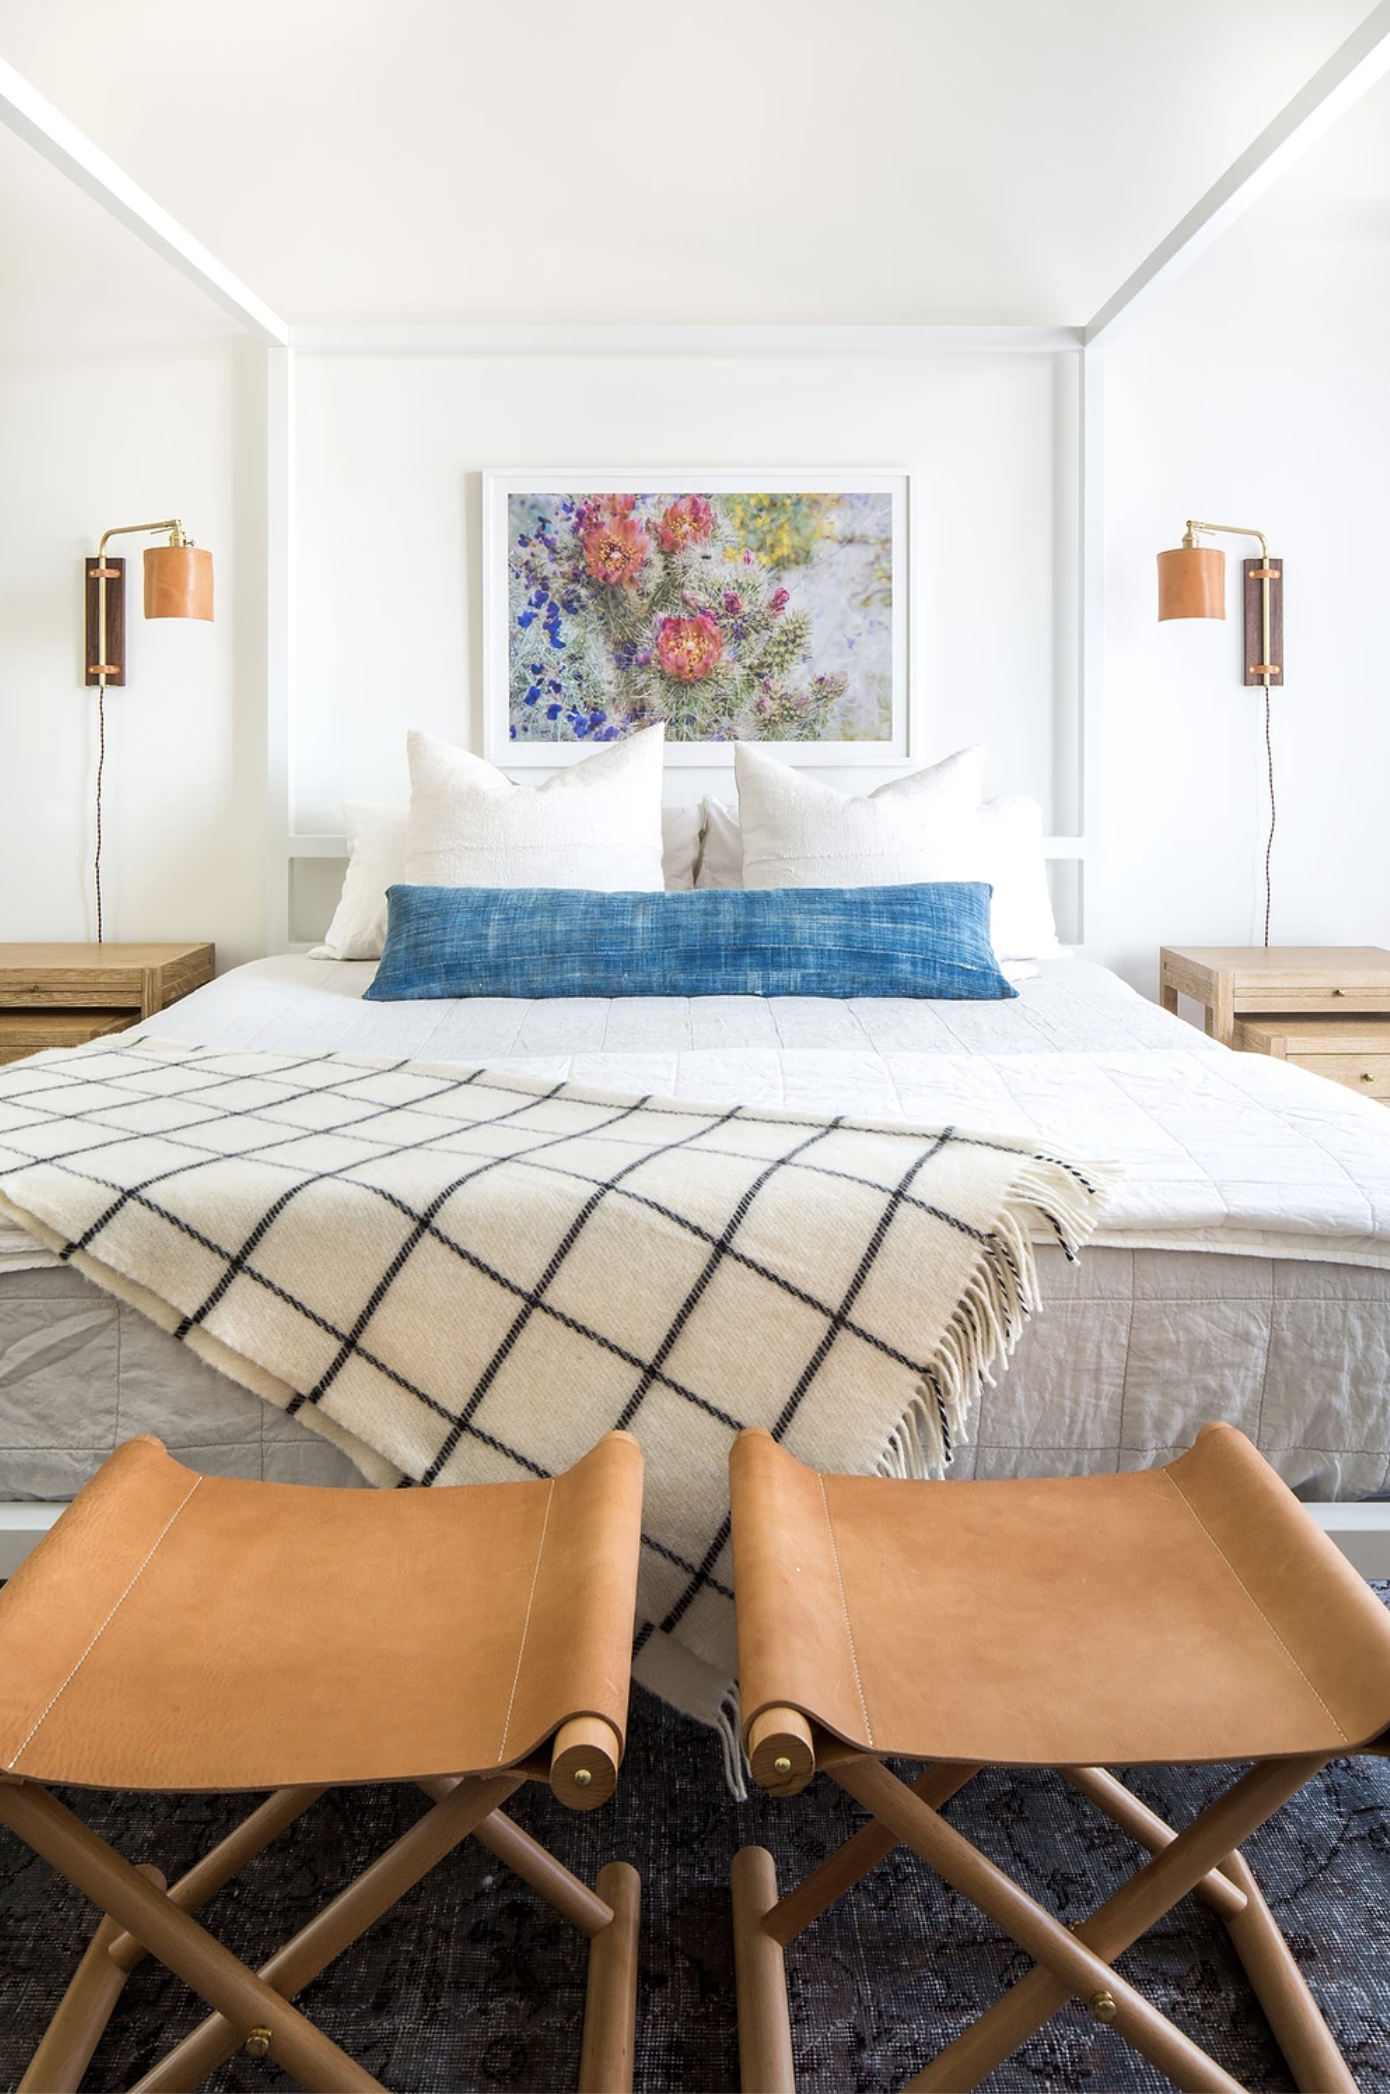 Diy Bedroom Ideas For Small Rooms – redboth.com